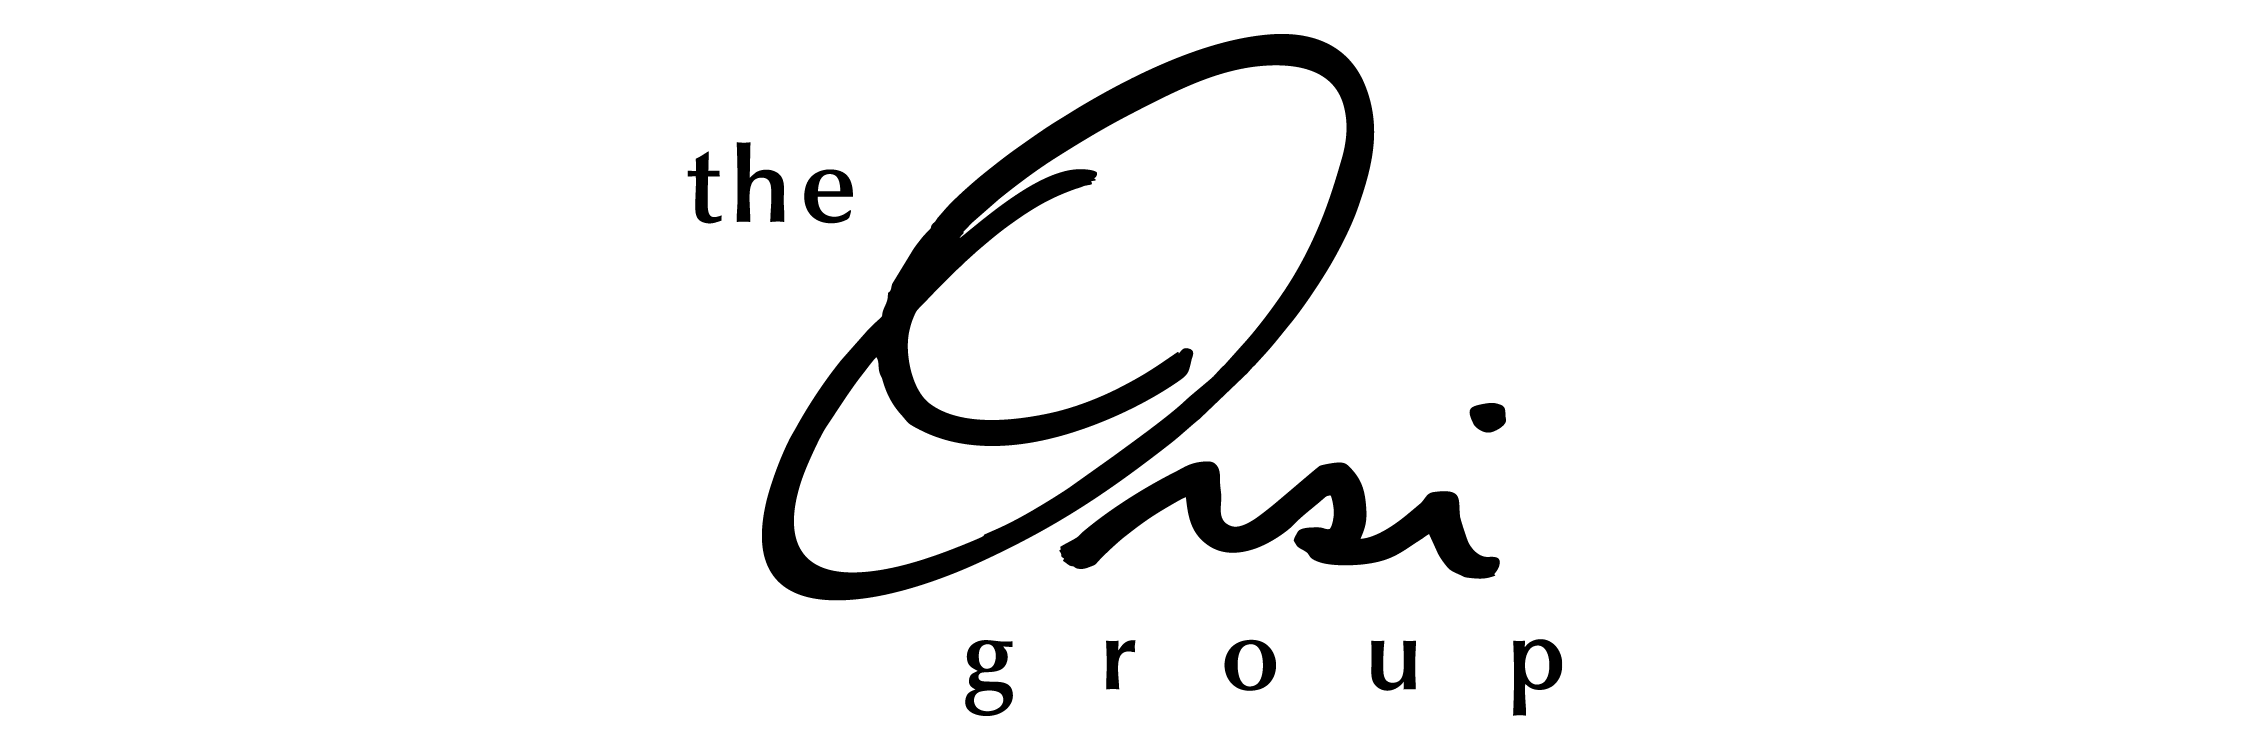 The Orsi Group (logo)